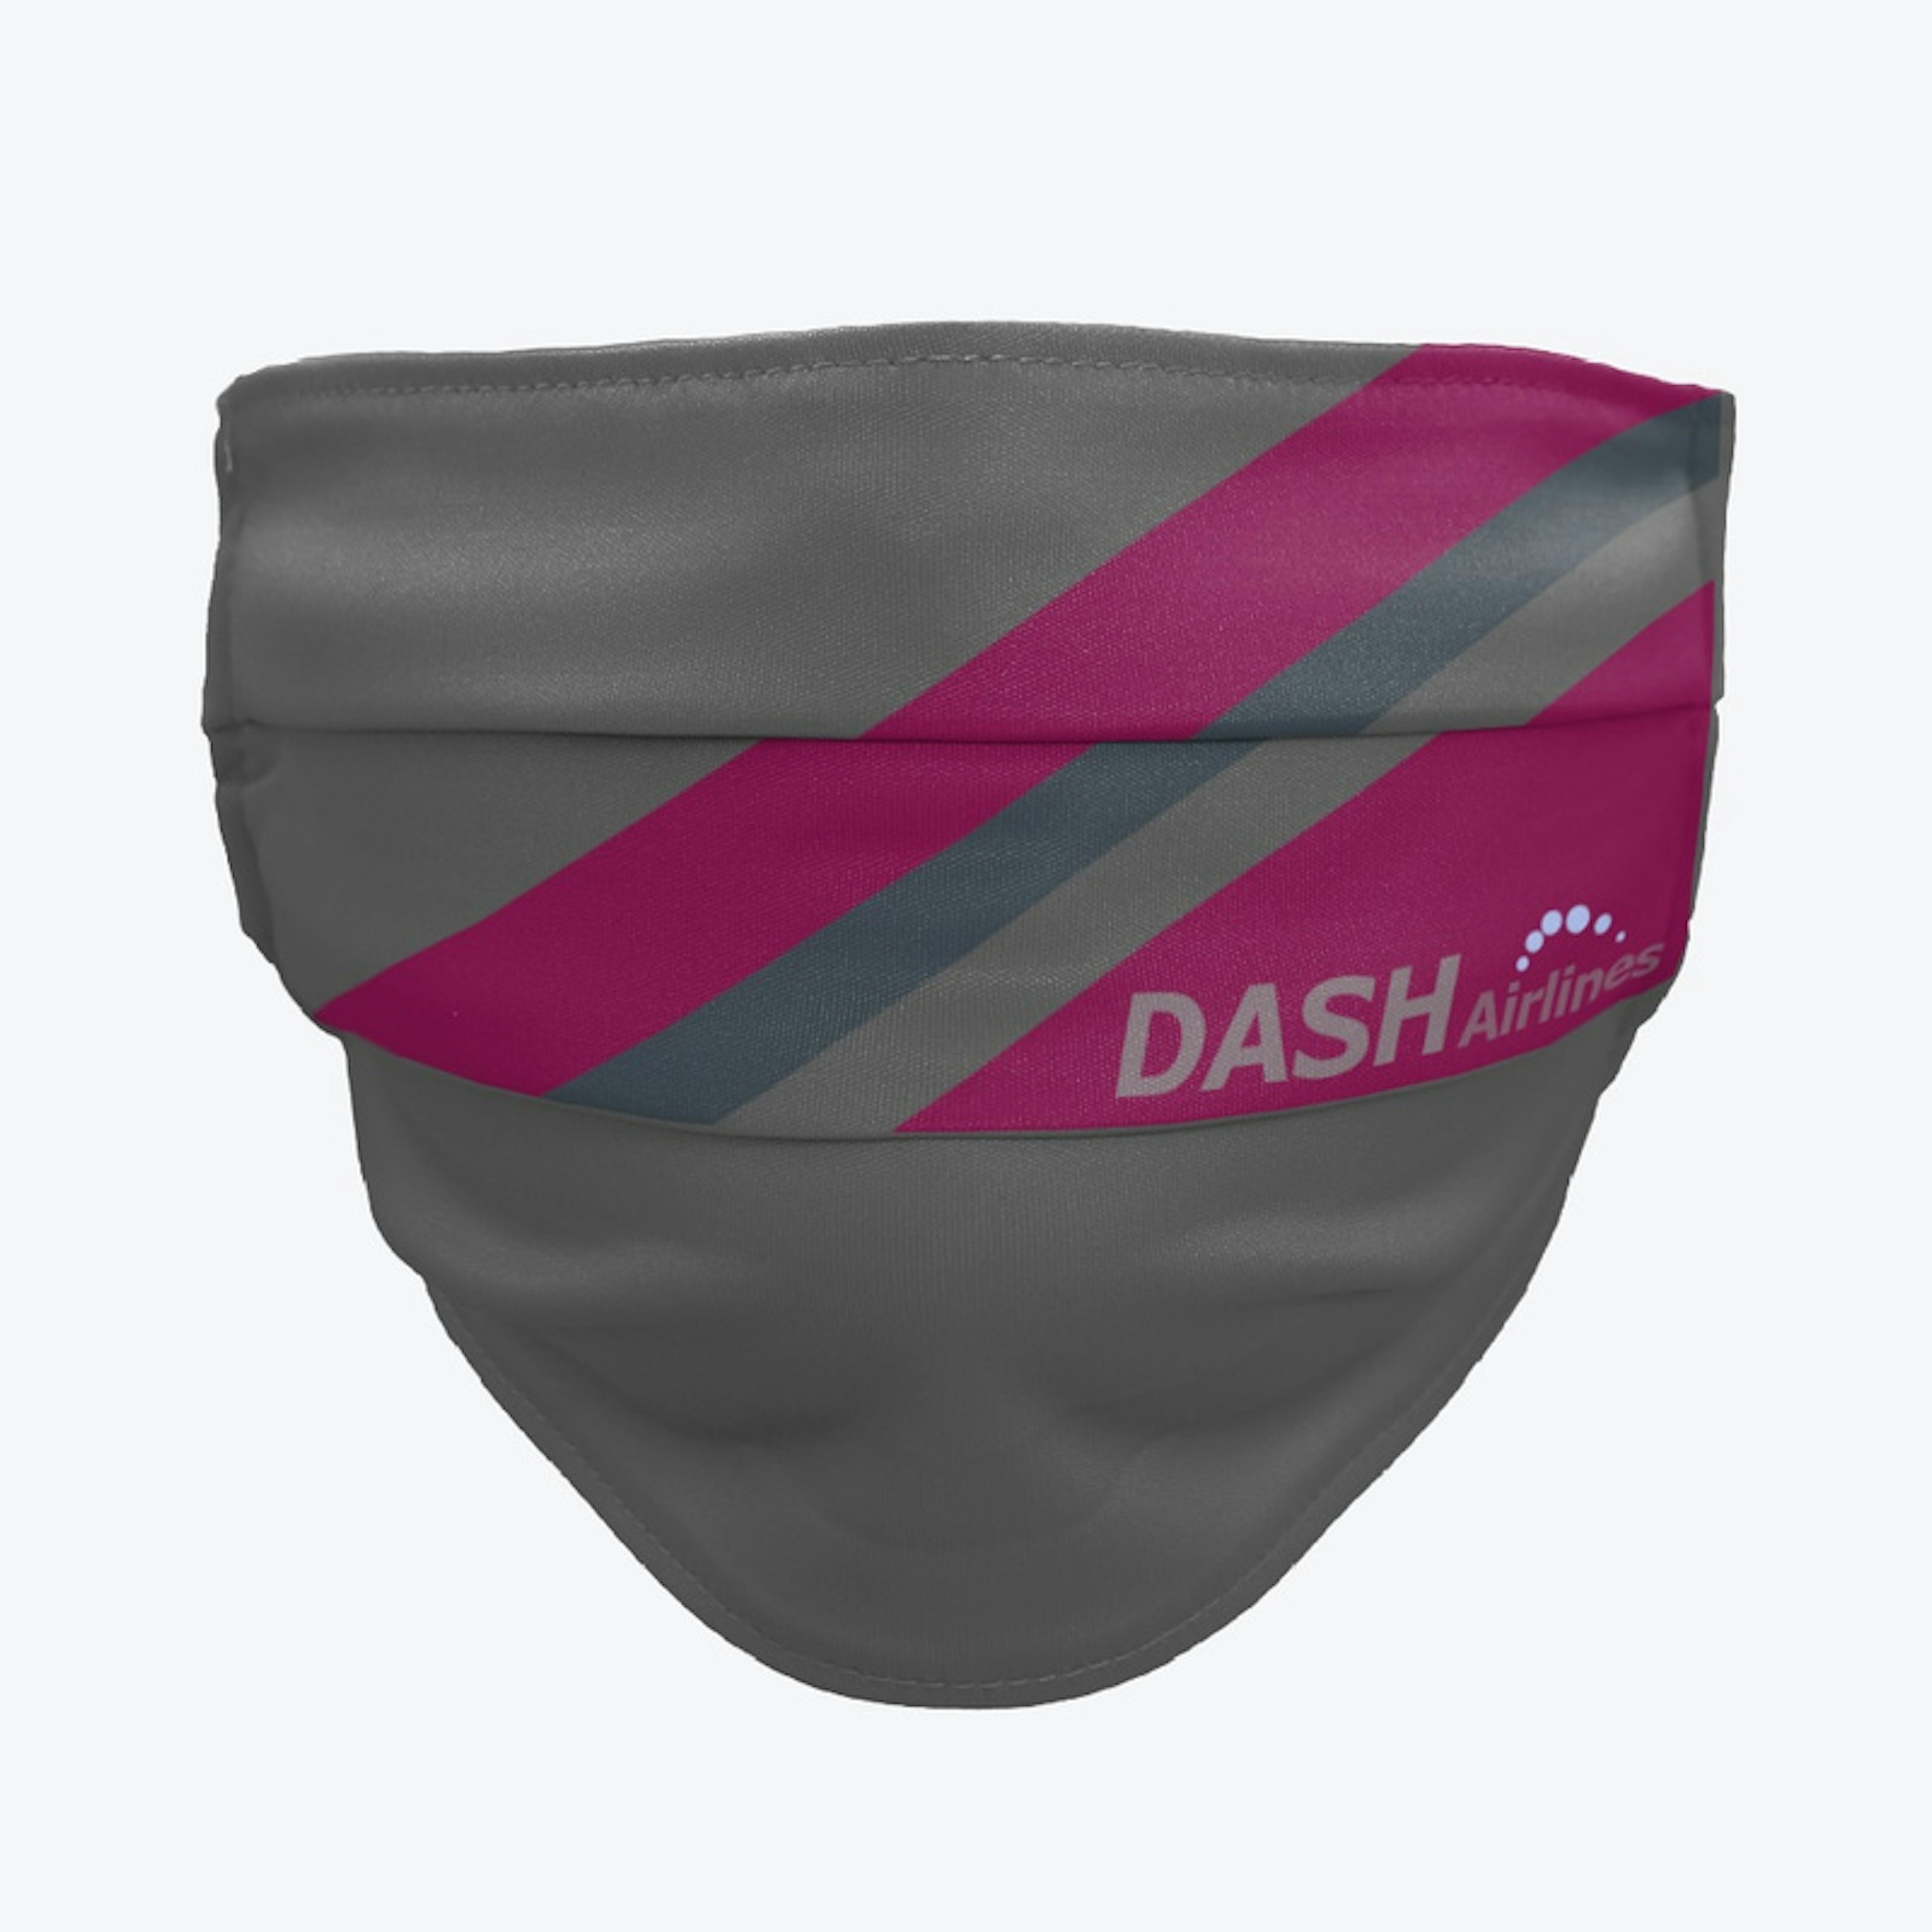 Dash Airlines 